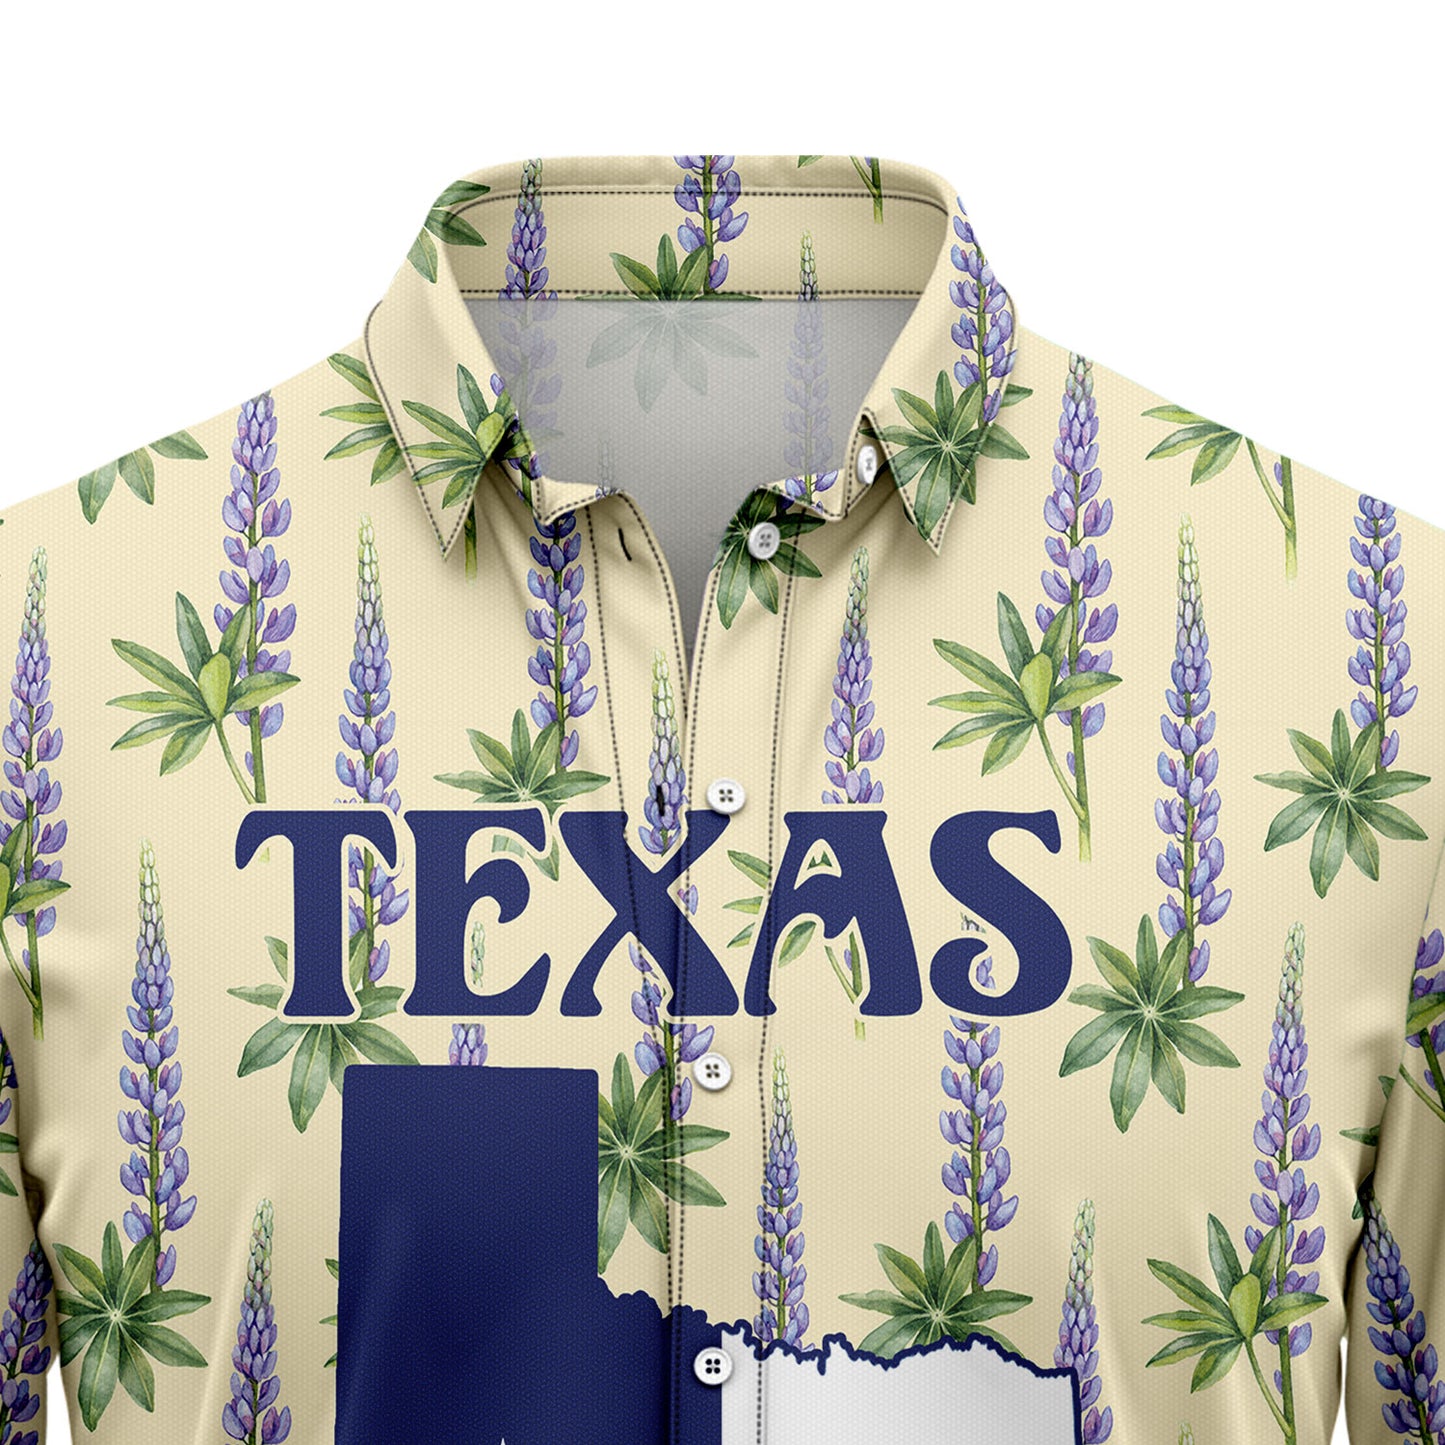 The Lone Star State Texas H237009 Hawaiian Shirt